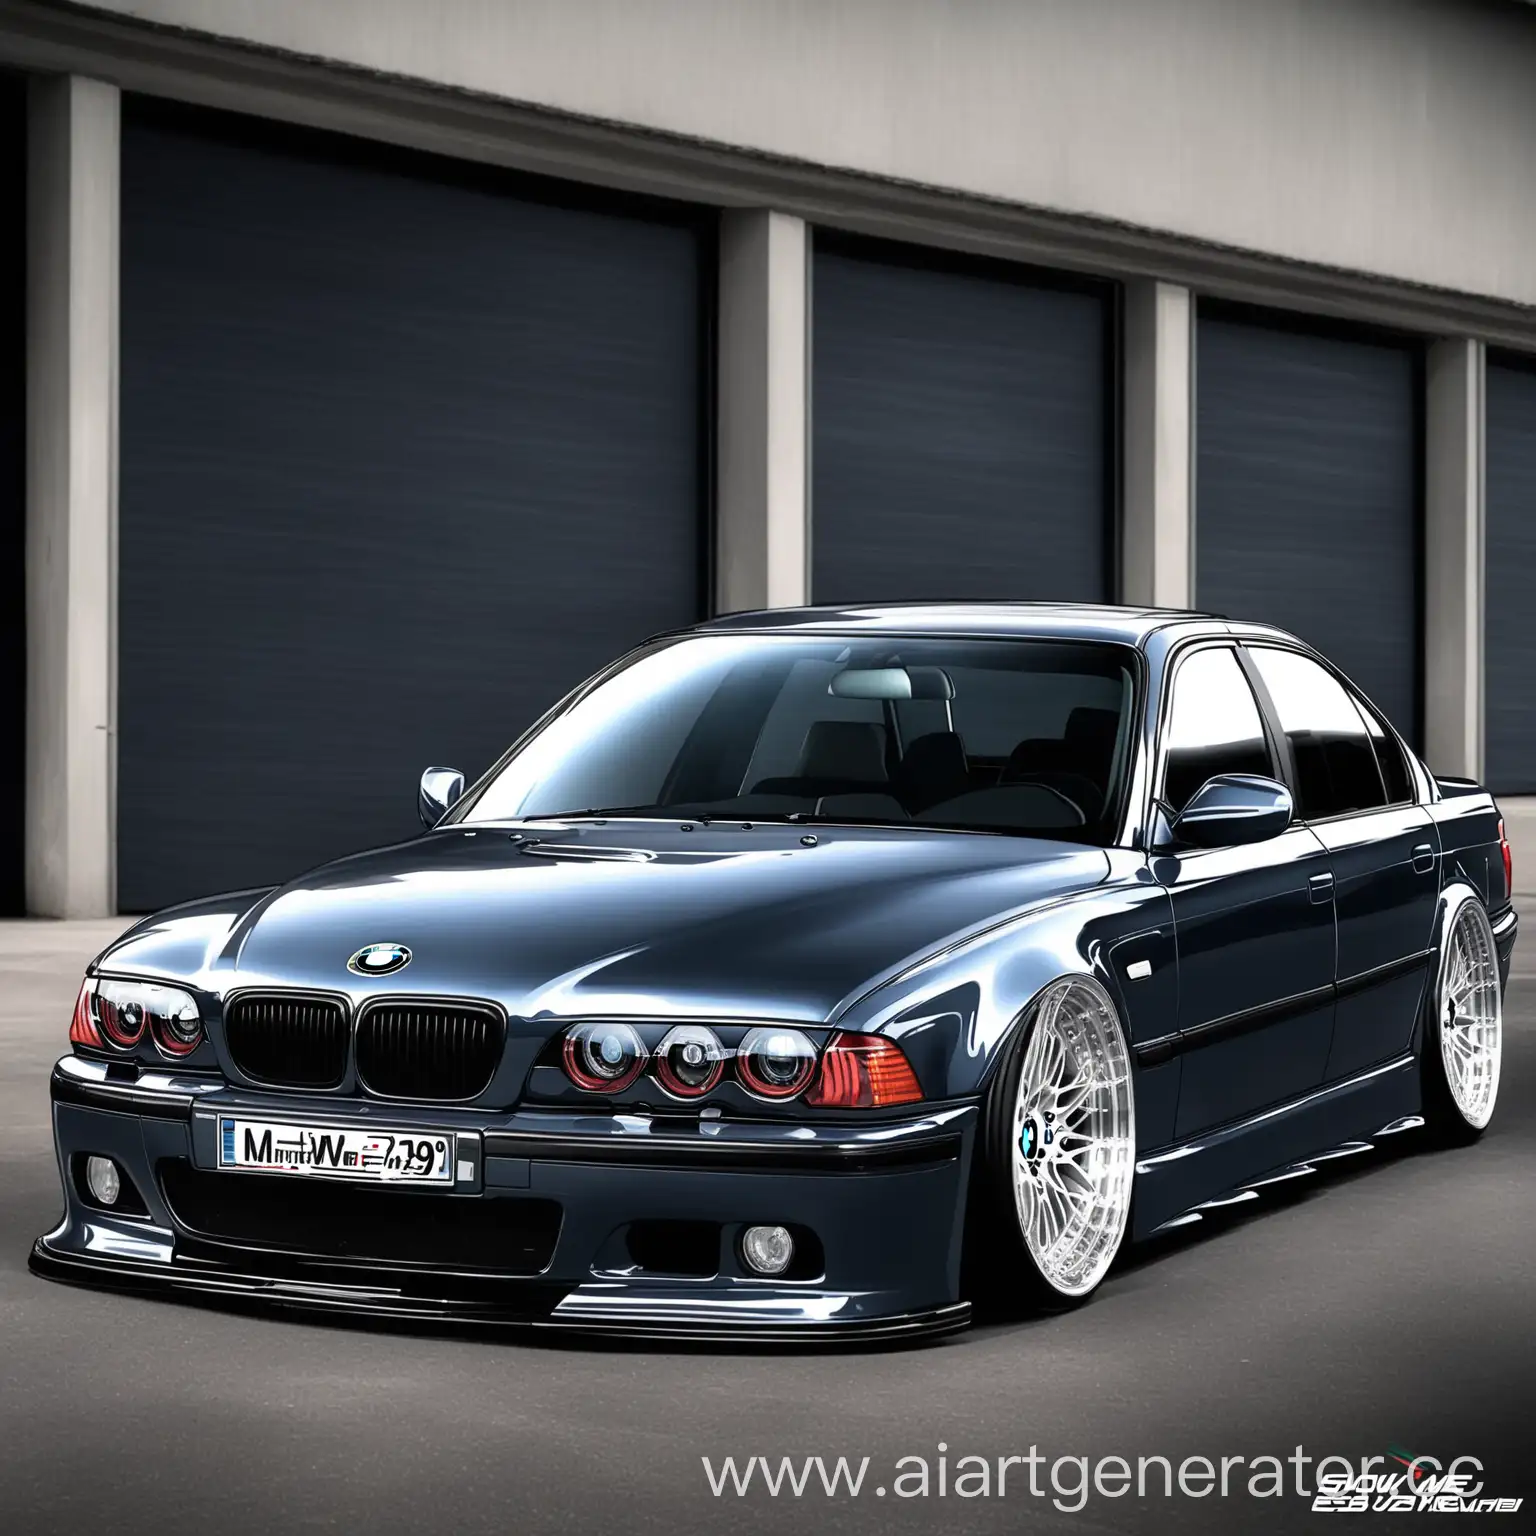 Luxury-BMW-E39-Sedan-Parked-in-Urban-Setting